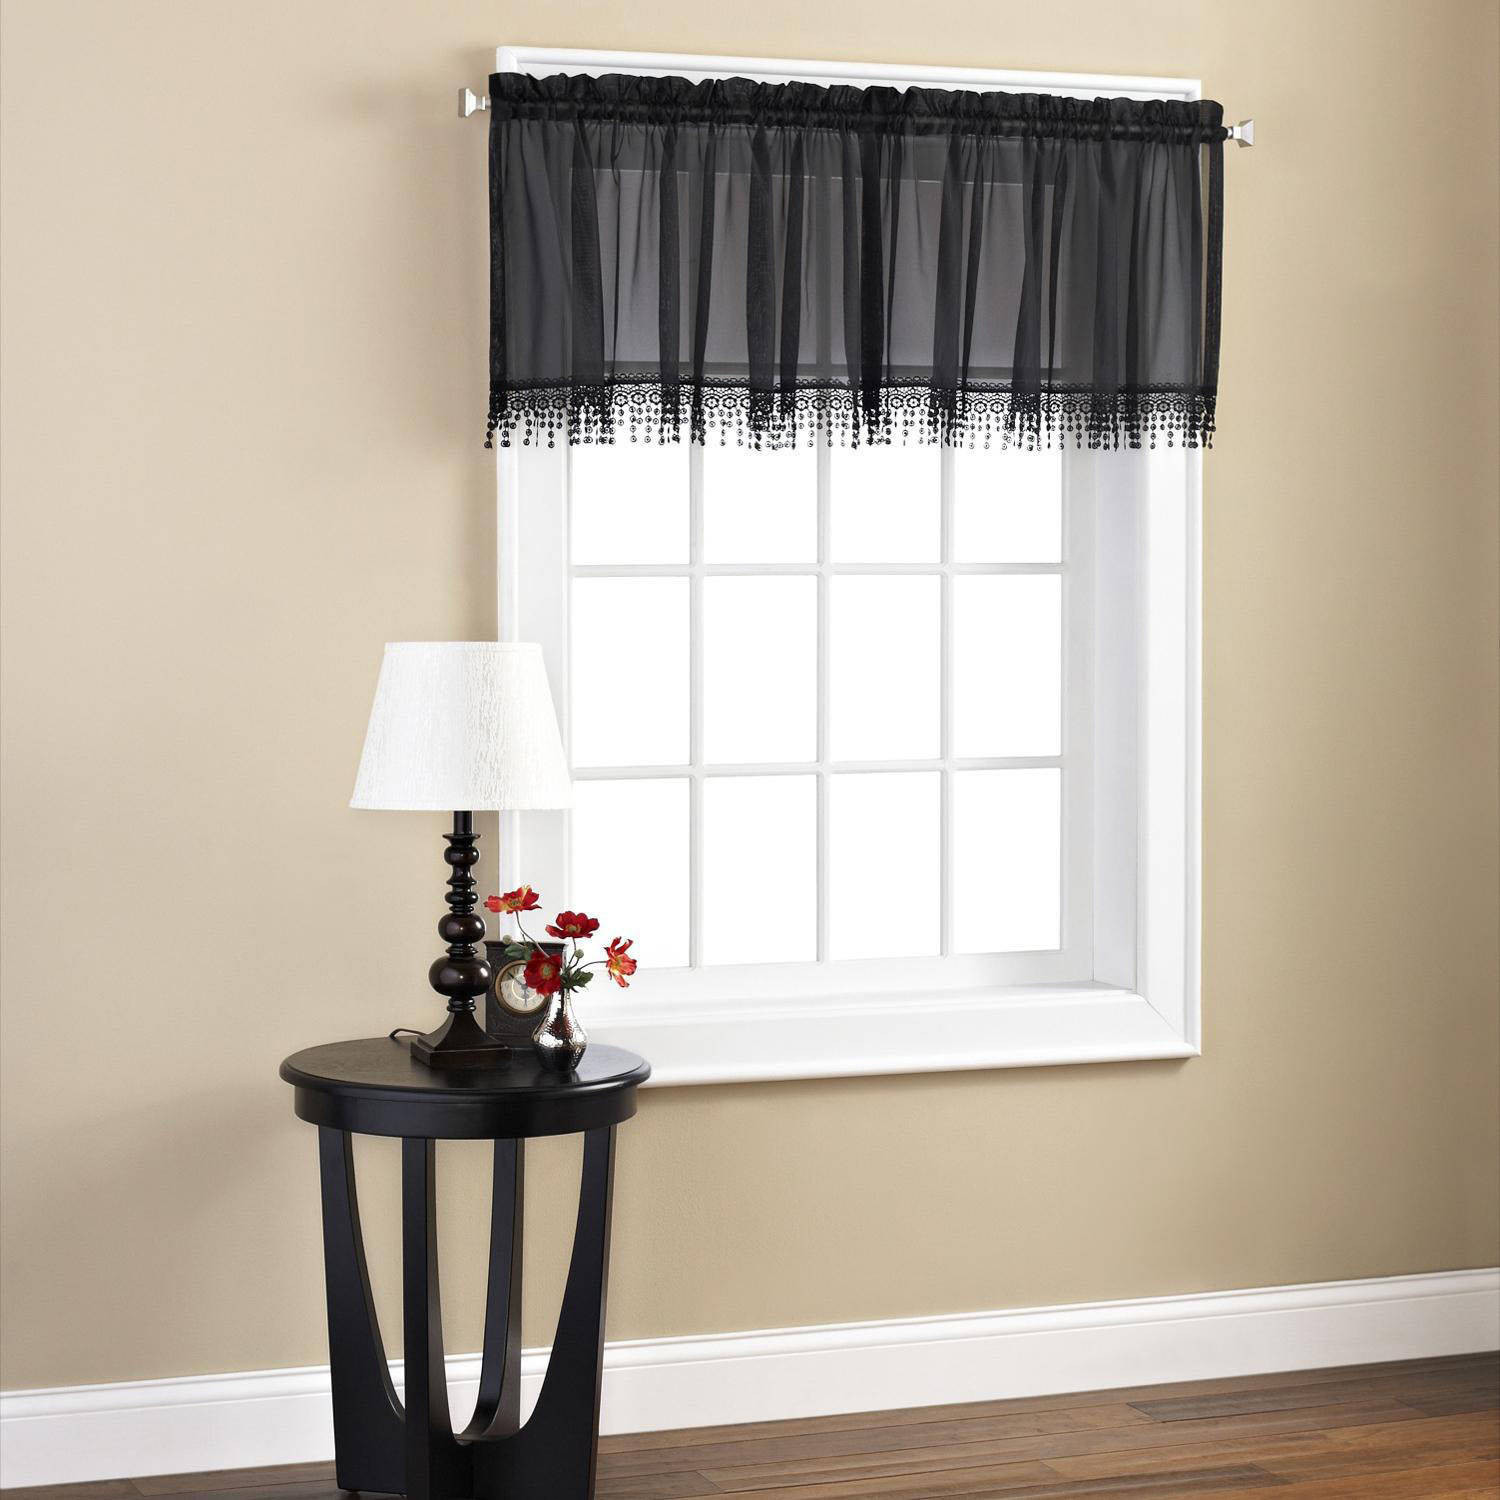 Black Kitchen Curtains
 Curtain Curtains At Walmart For Elegant Home Accessories